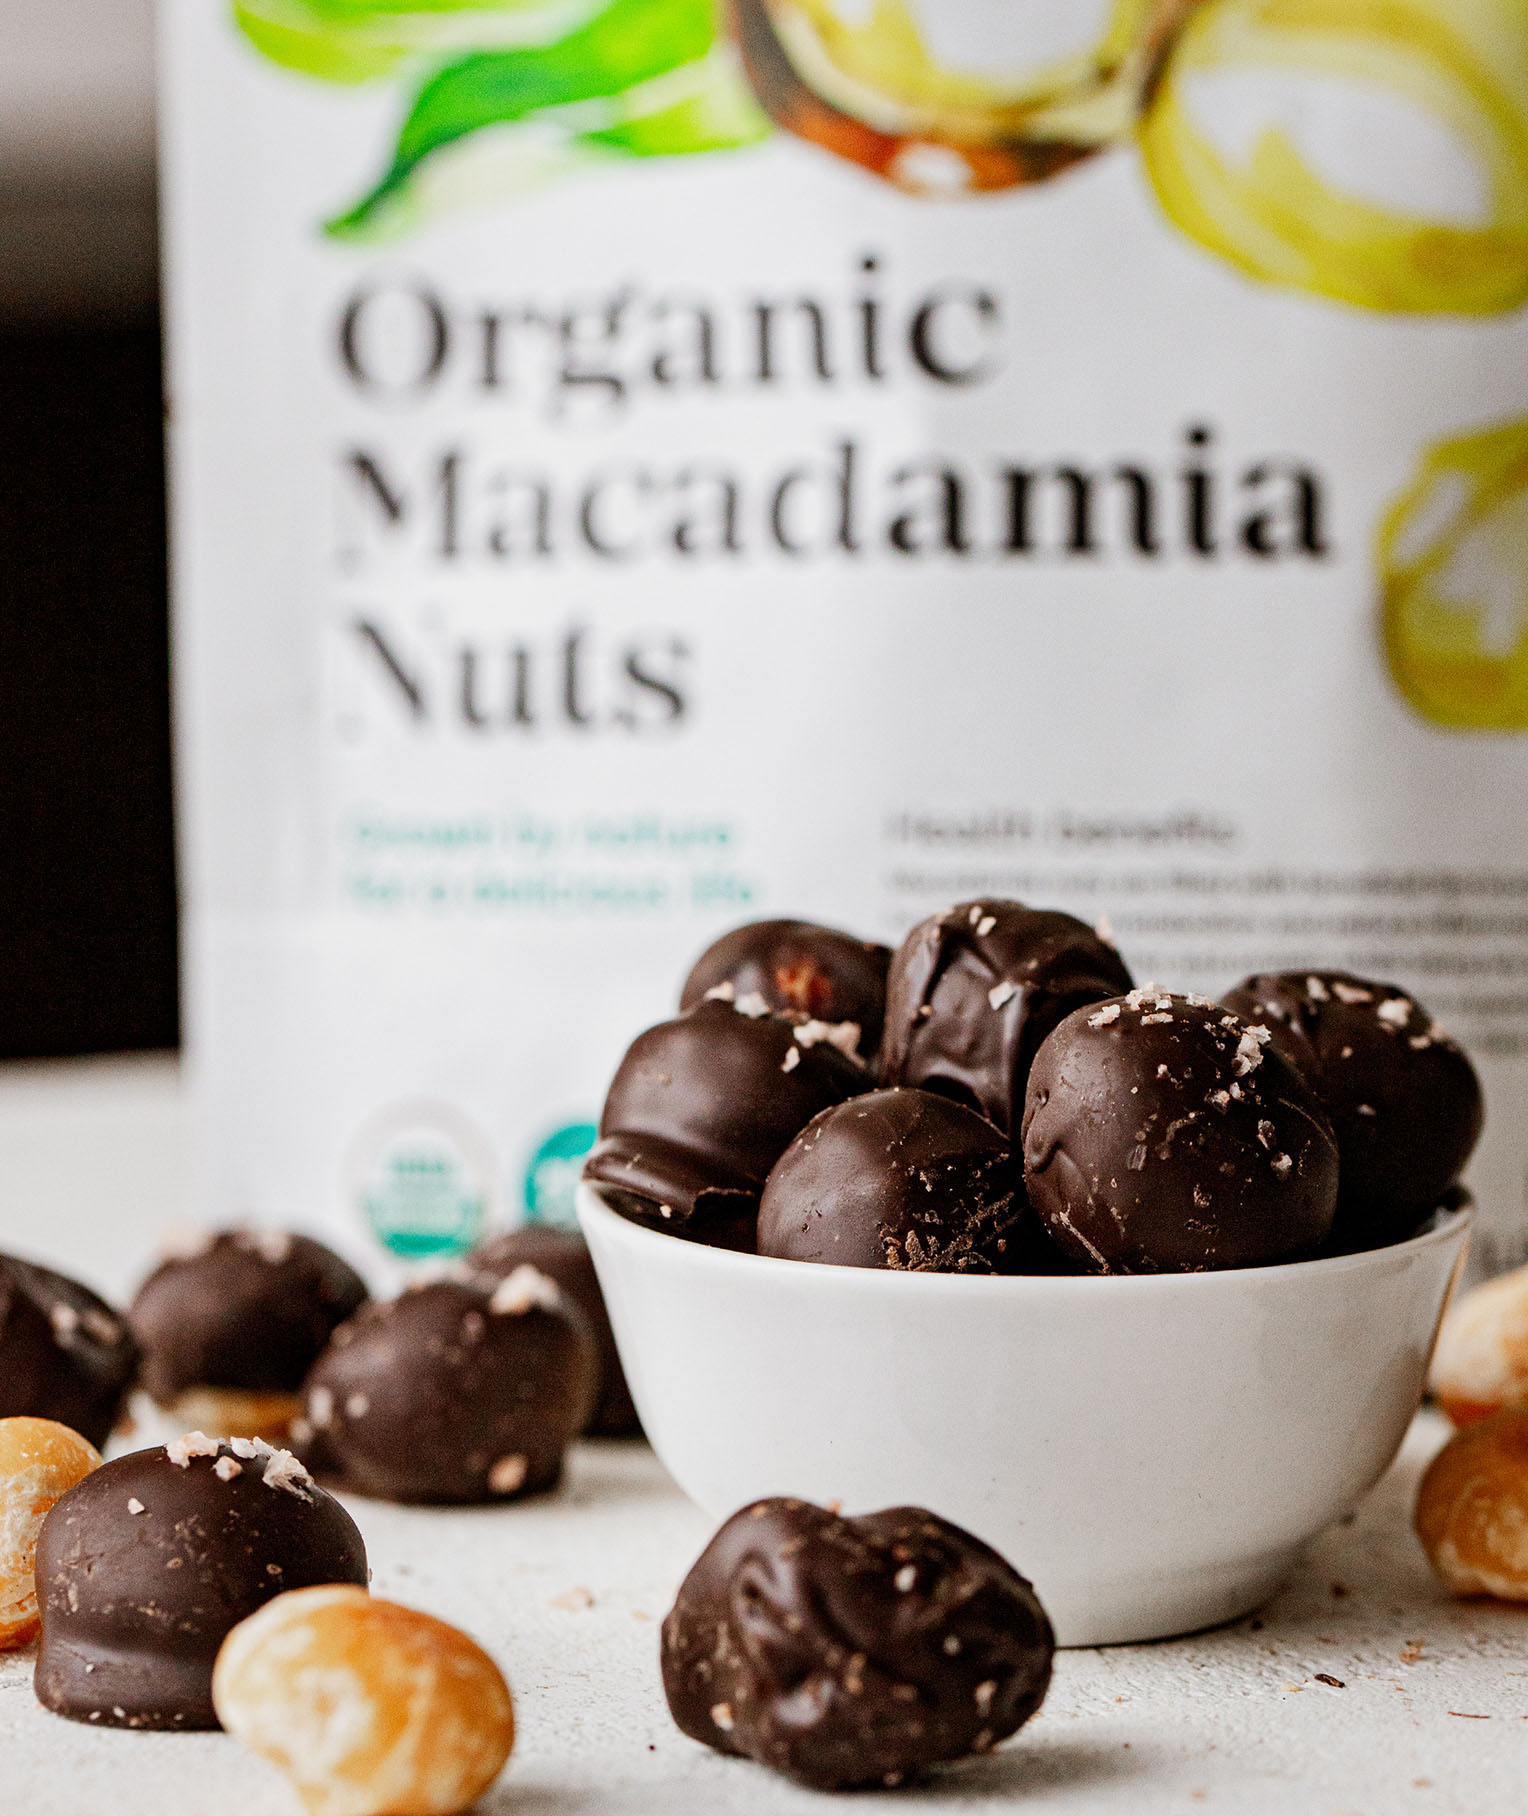 Chocolate-Covered Macadamia Nuts